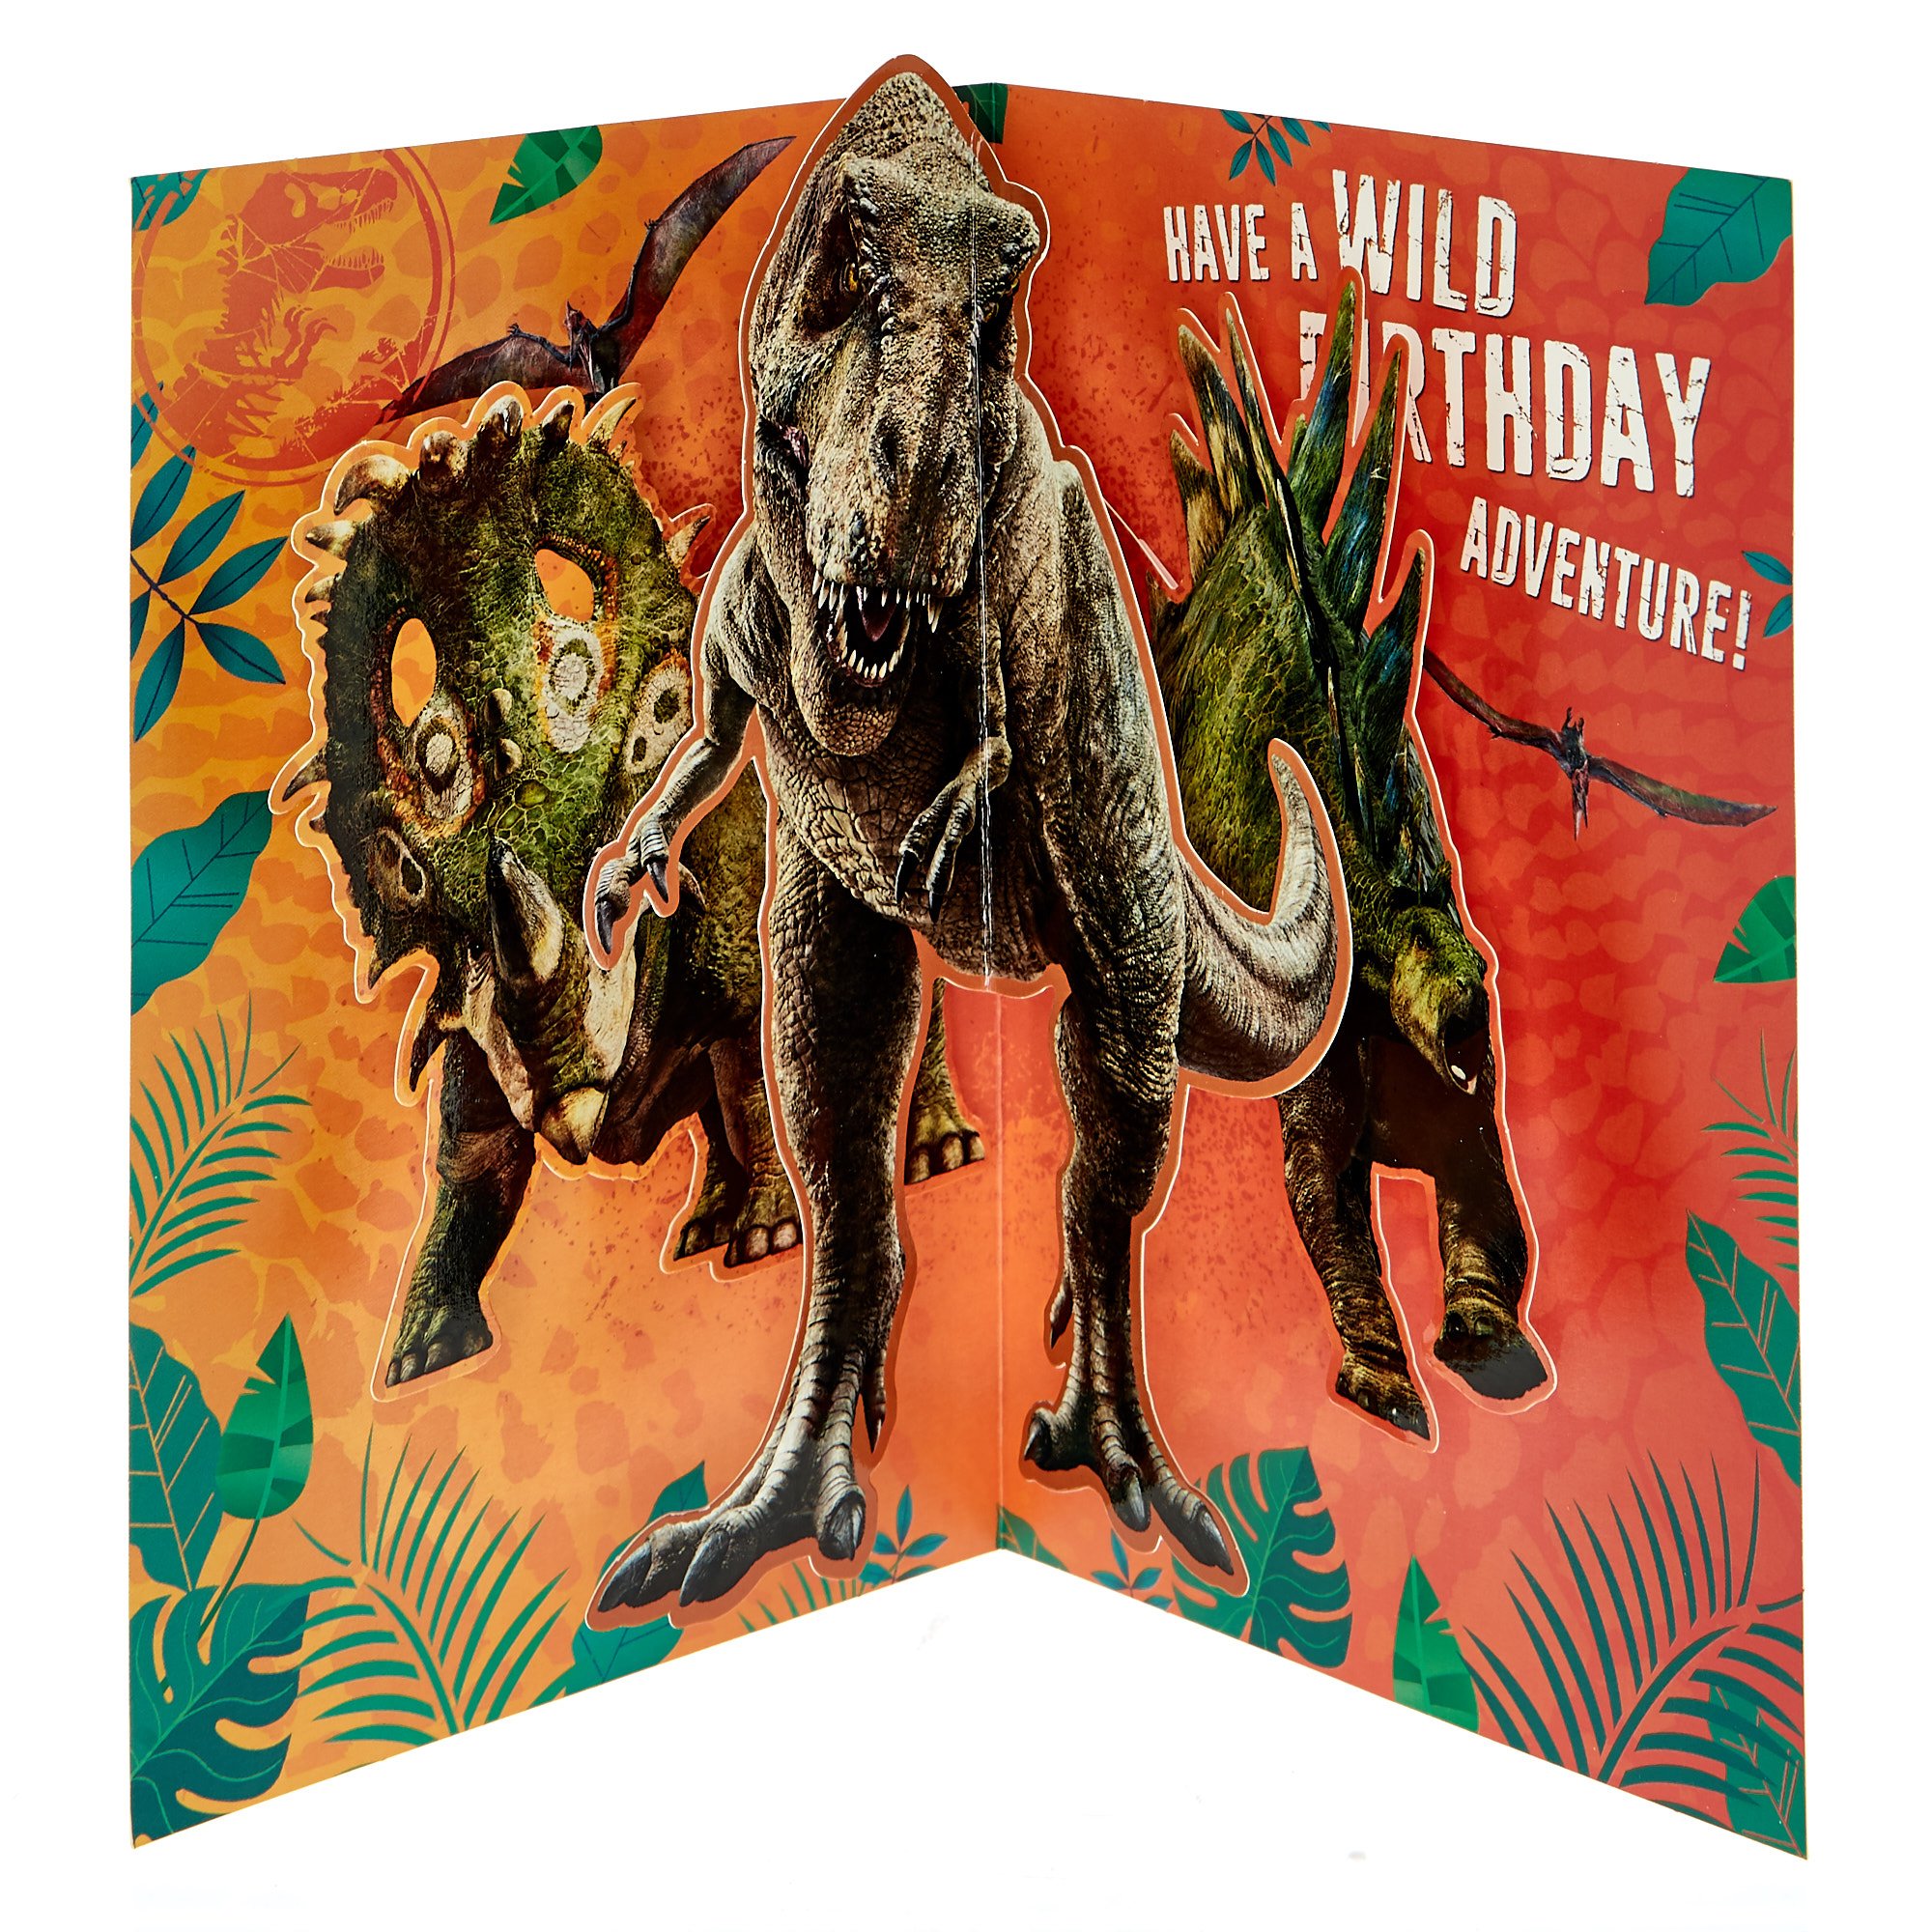 Jurassic World Pop-Up Birthday Card